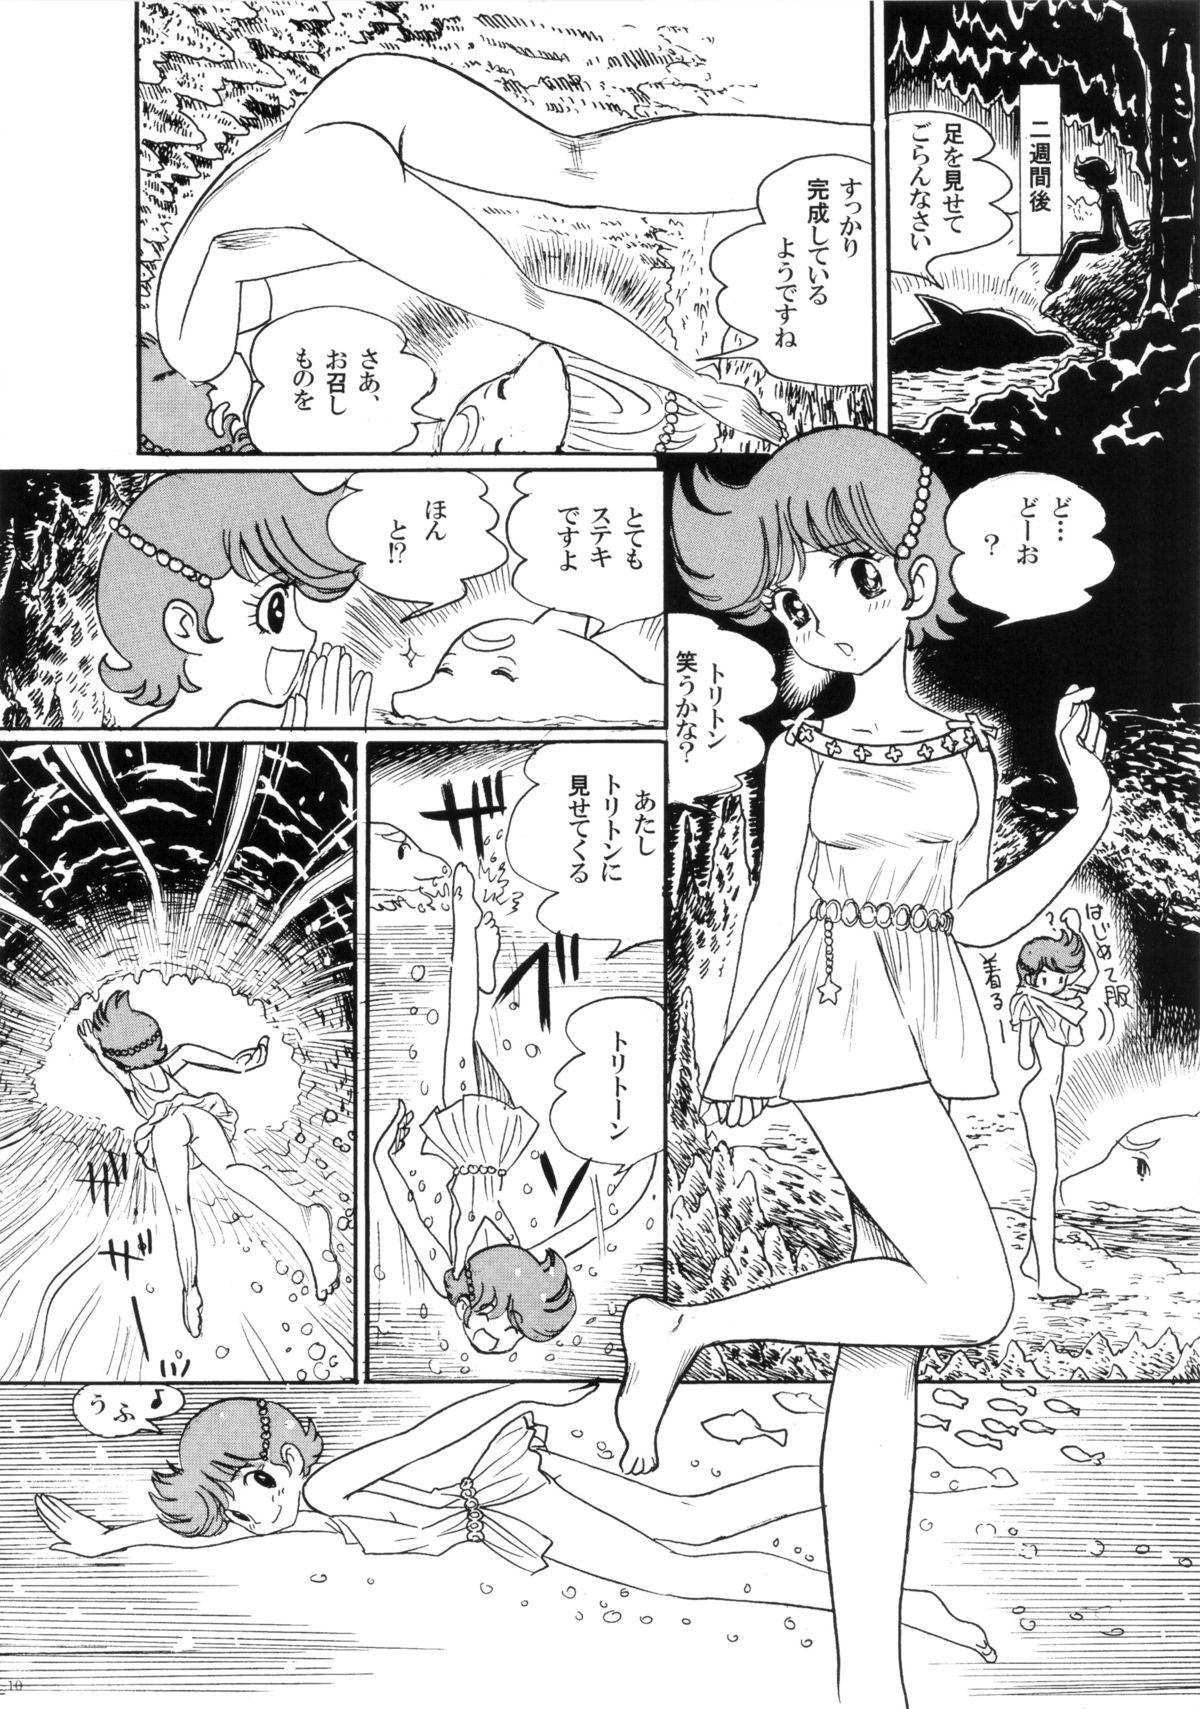 FLOUR2 Tezuka Manga Graffiti 9